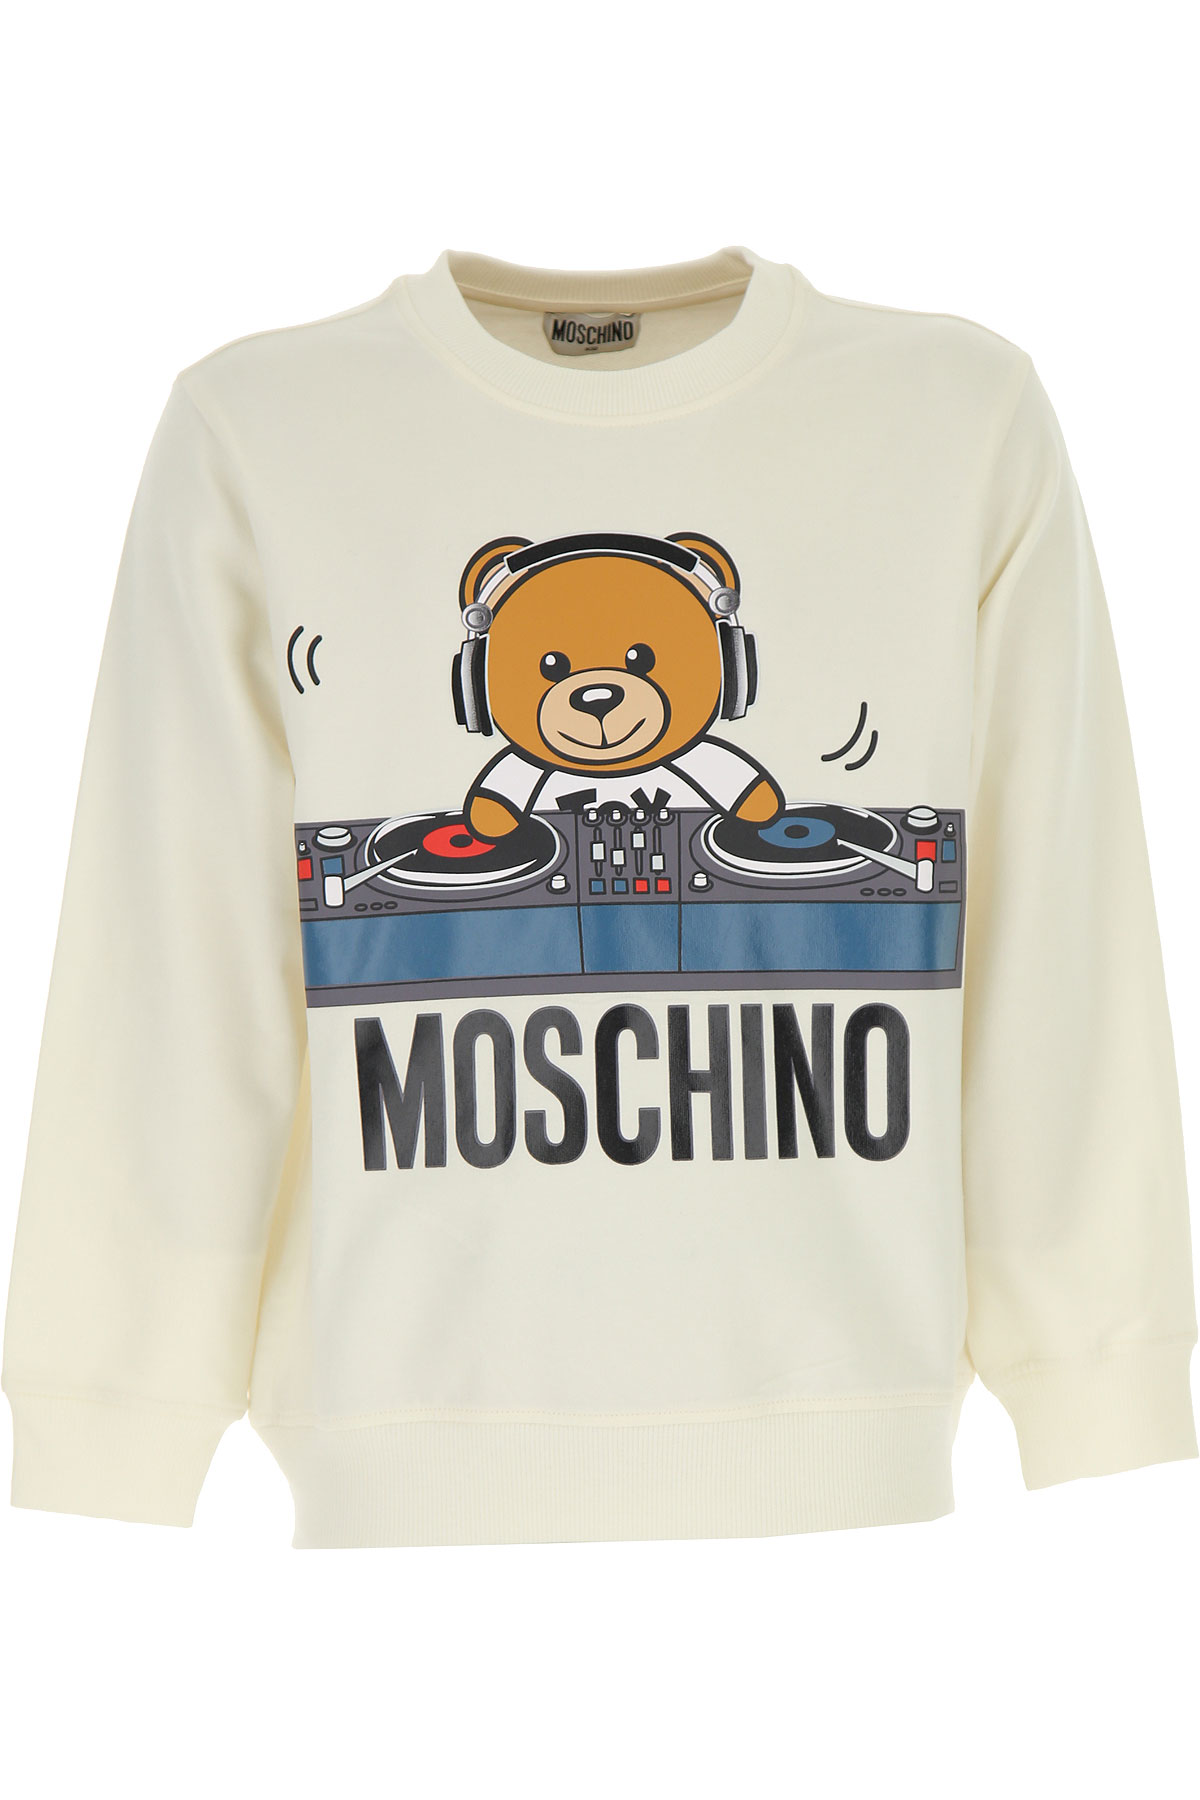 Moschino Kinder T-Shirt für Jungen Günstig im Sale, Creme, Baumwolle, 2017, 10Y 12Y 14Y 4Y 6Y 8Y